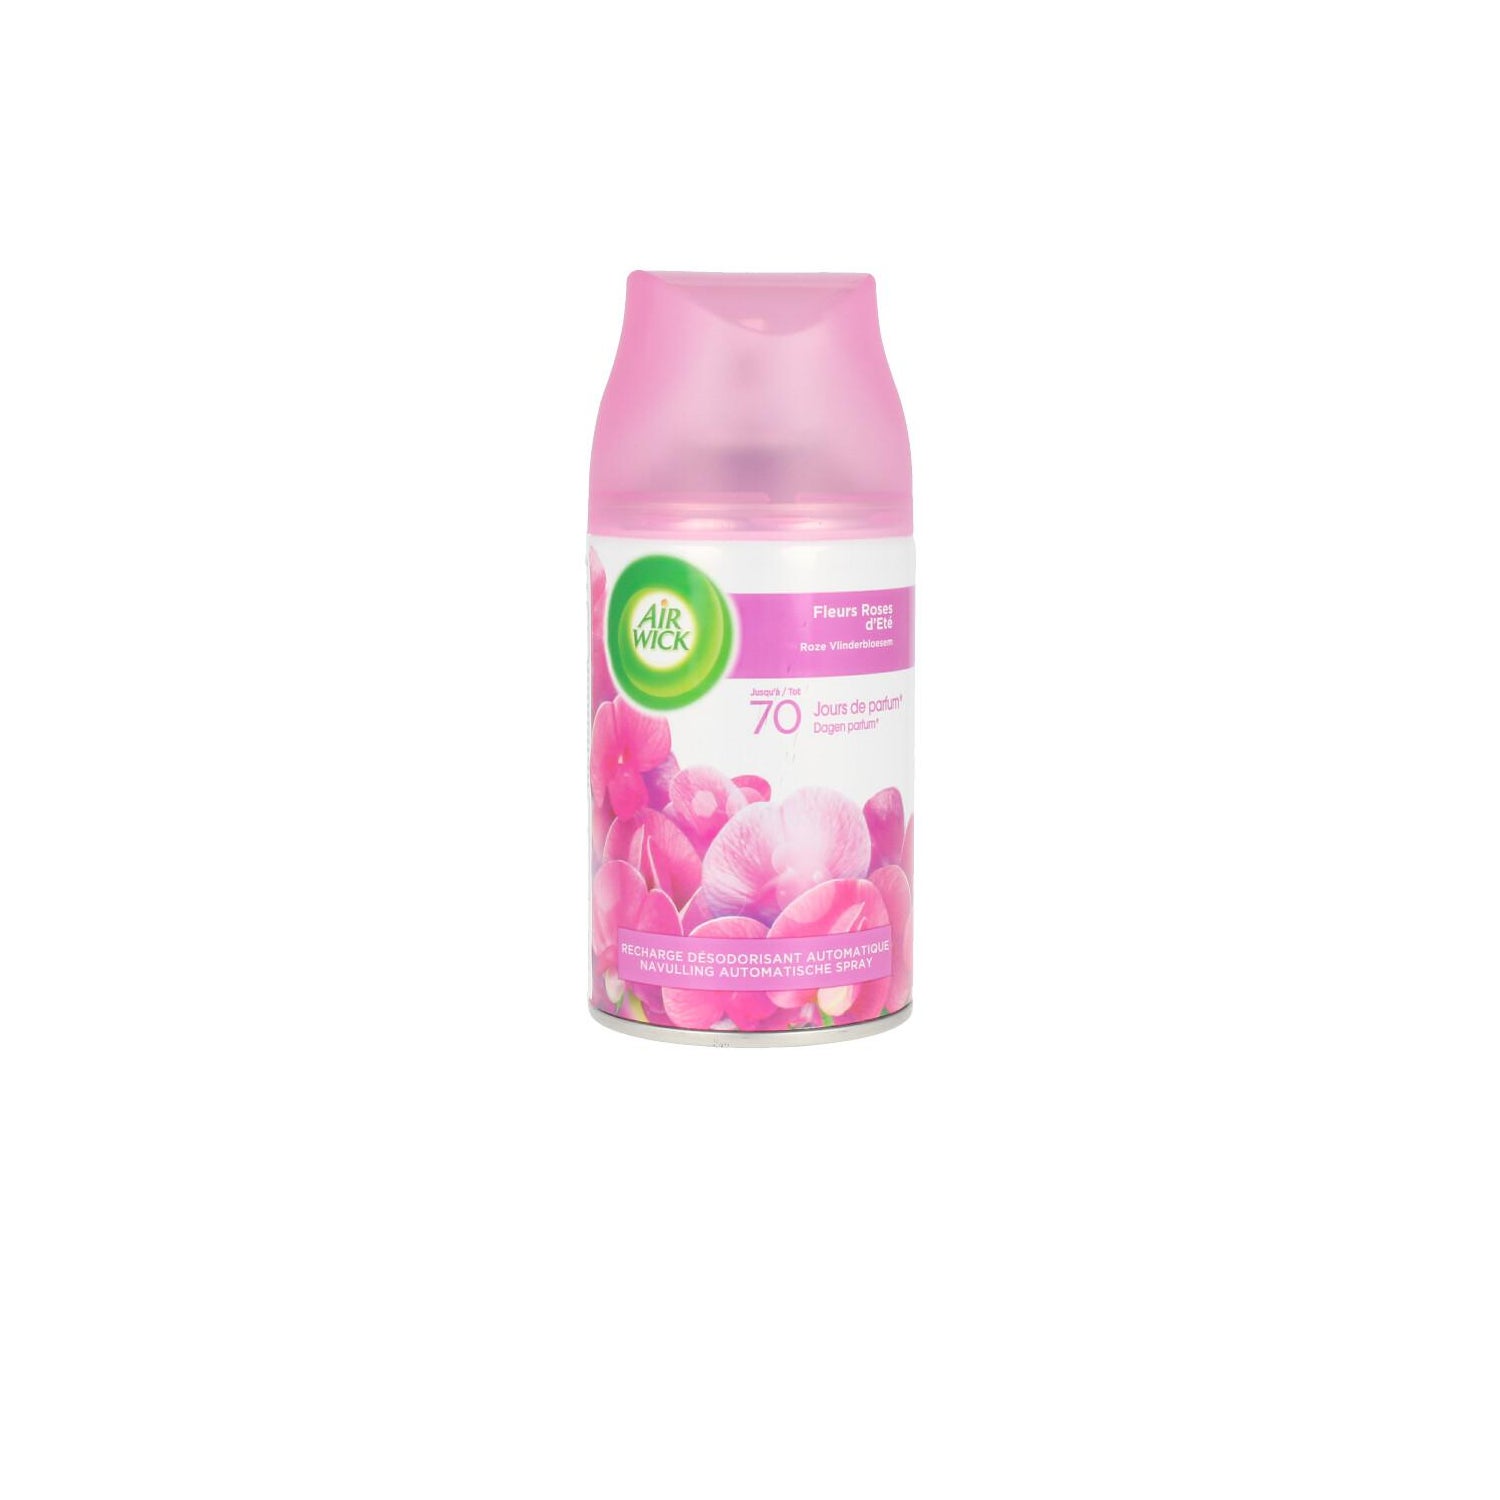 Air Wick Freshmatic Ambientador Recambio Pink Blossom 250ml